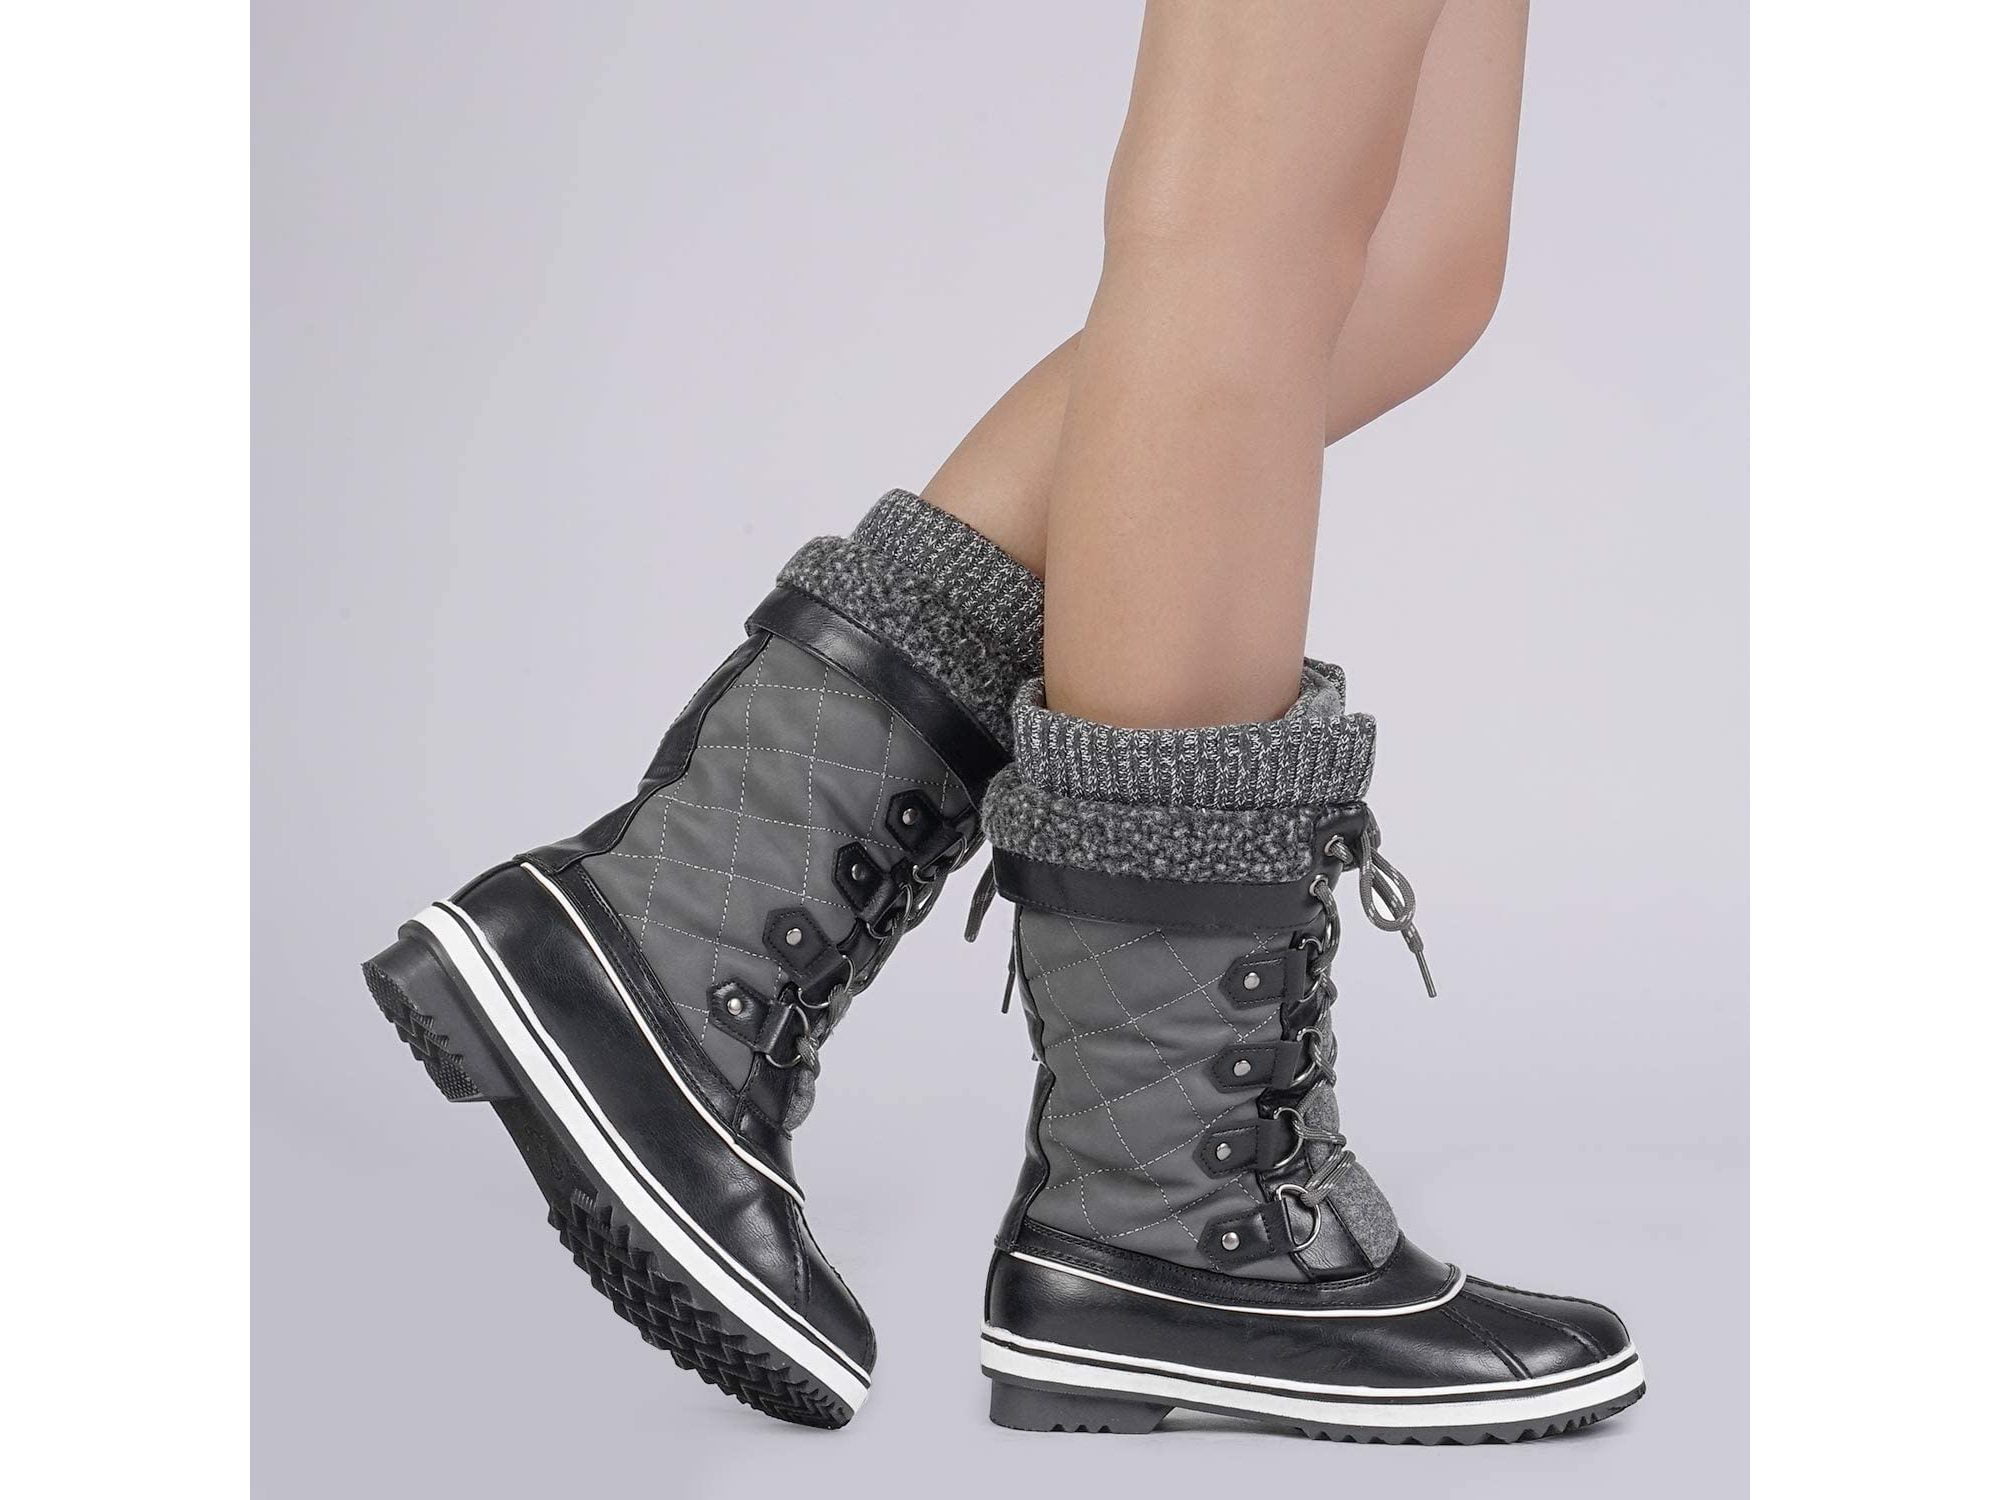 DREAM PAIRS Women's Mid Calf Fashion Winter Snow Boots